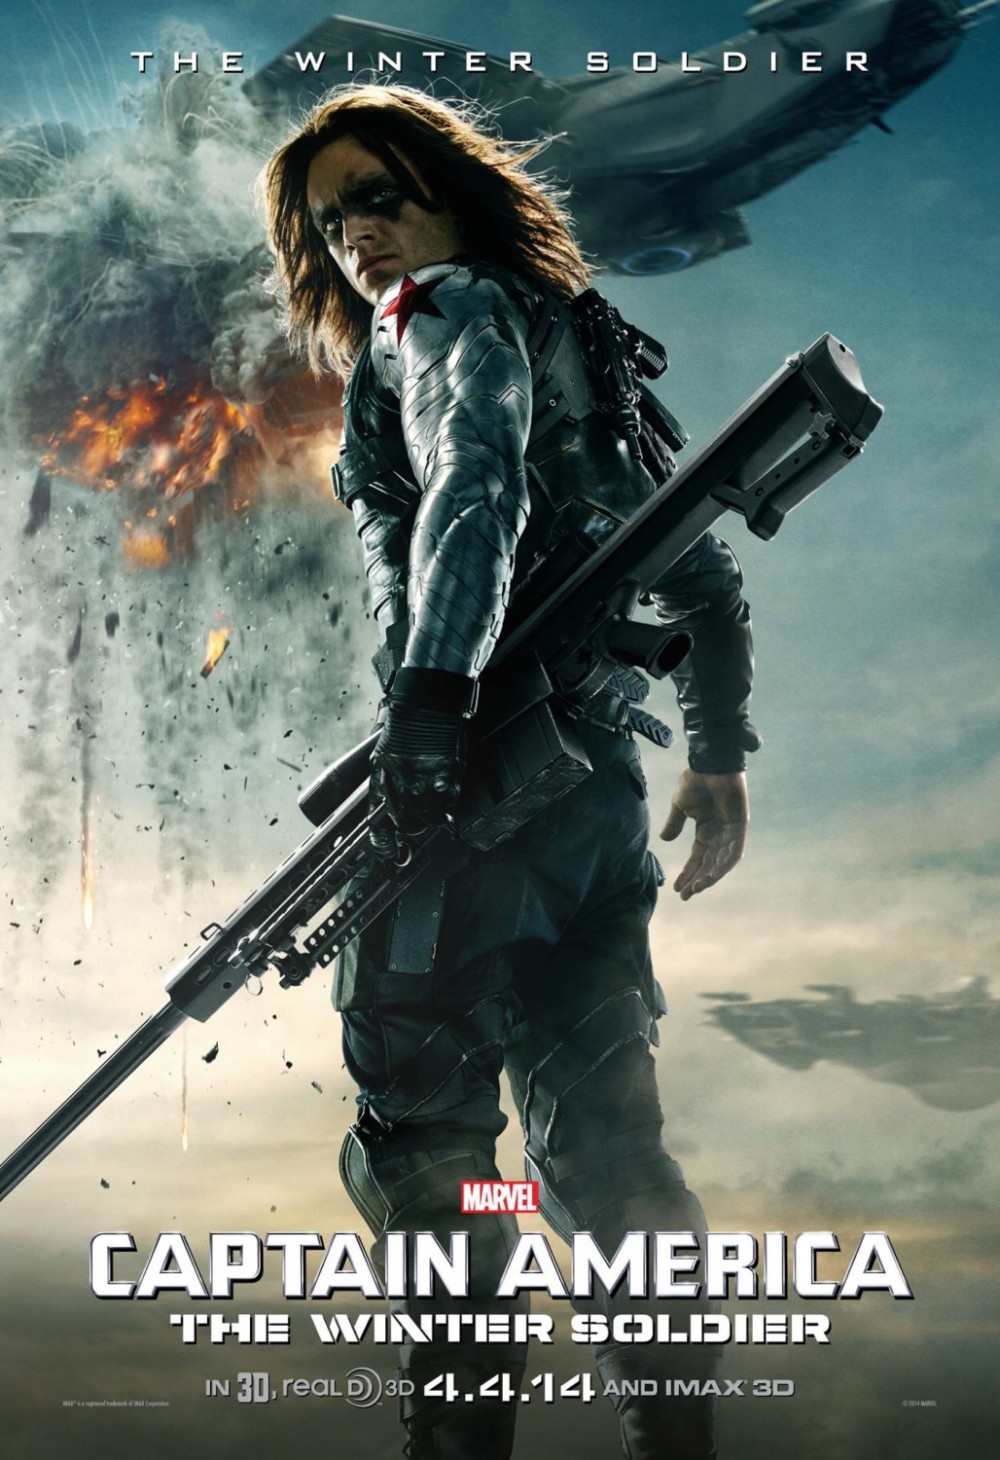 Vier minuten-preview uit 'Captain America: The Winter Soldier'!